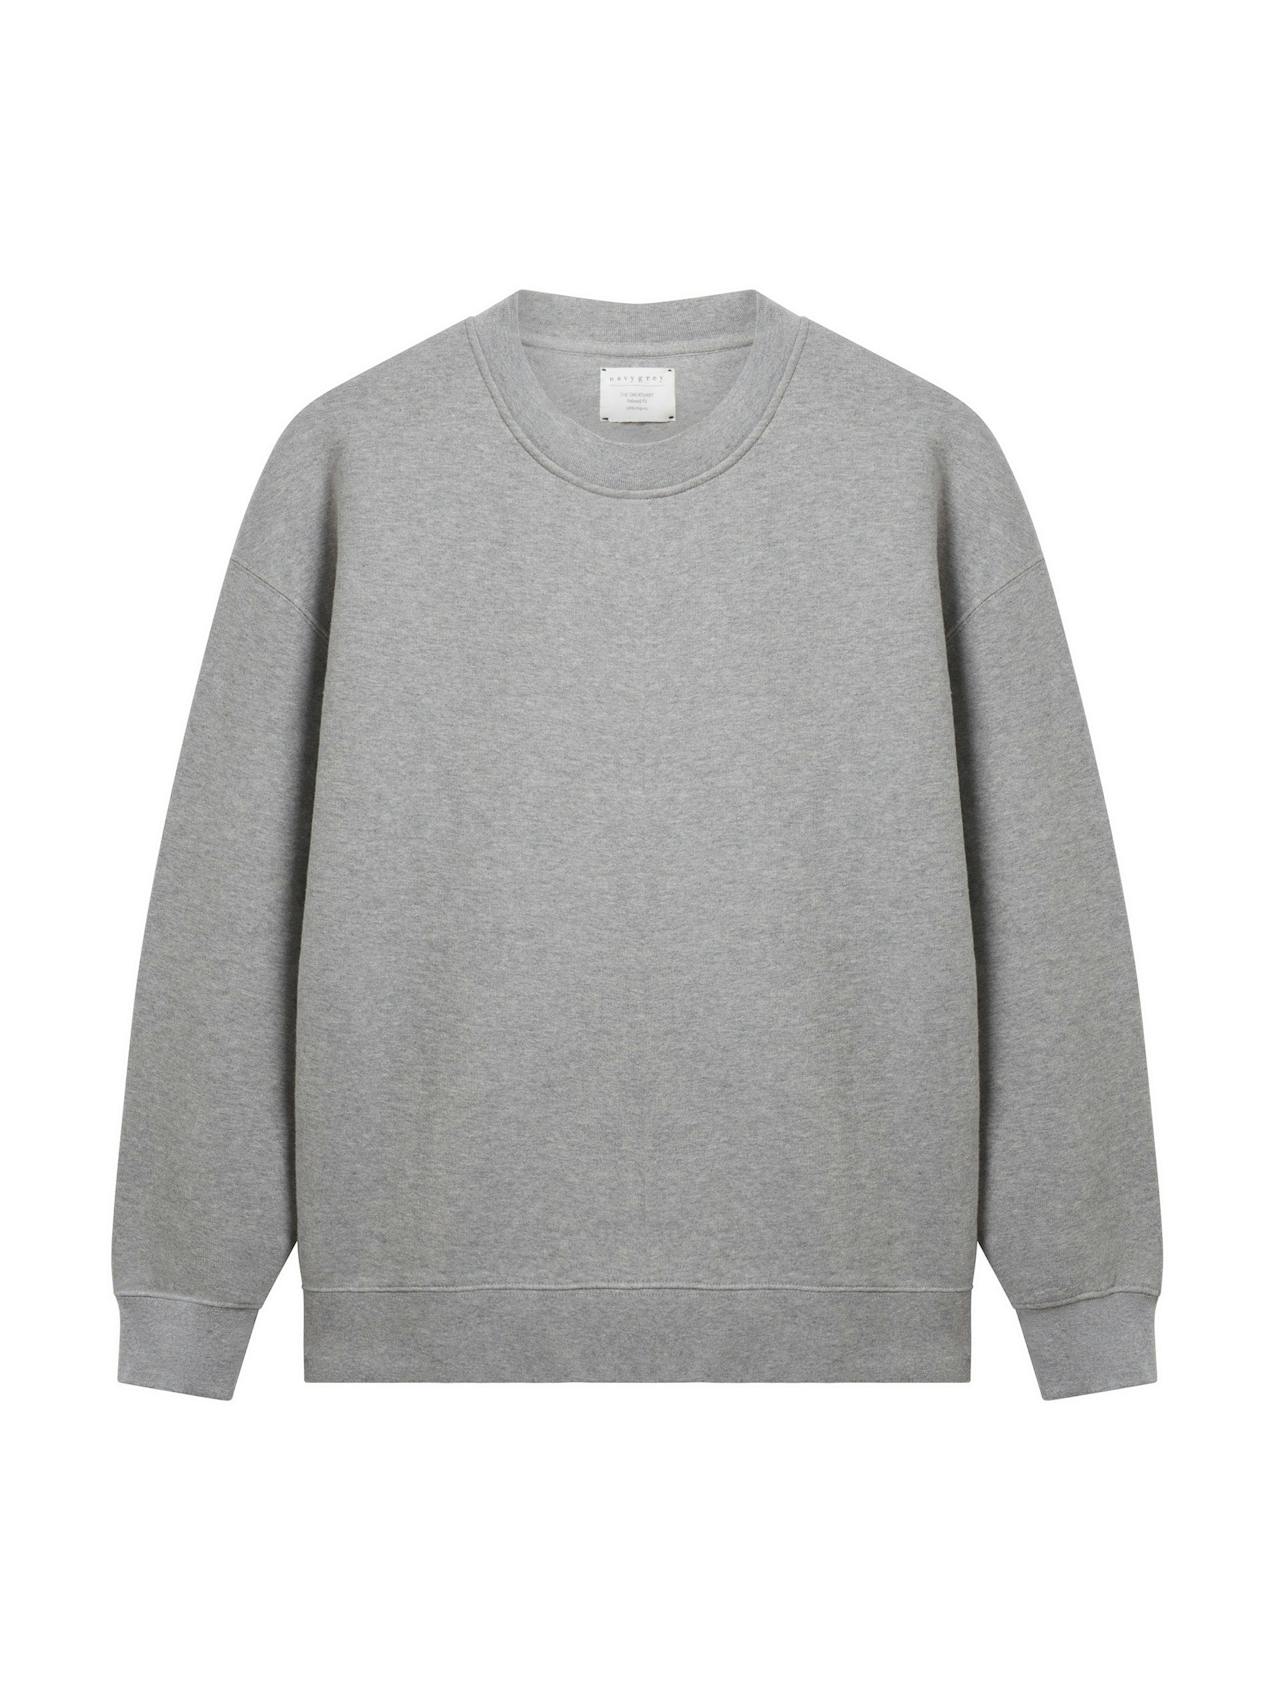 Slate grey relaxed-fit sweatshirt